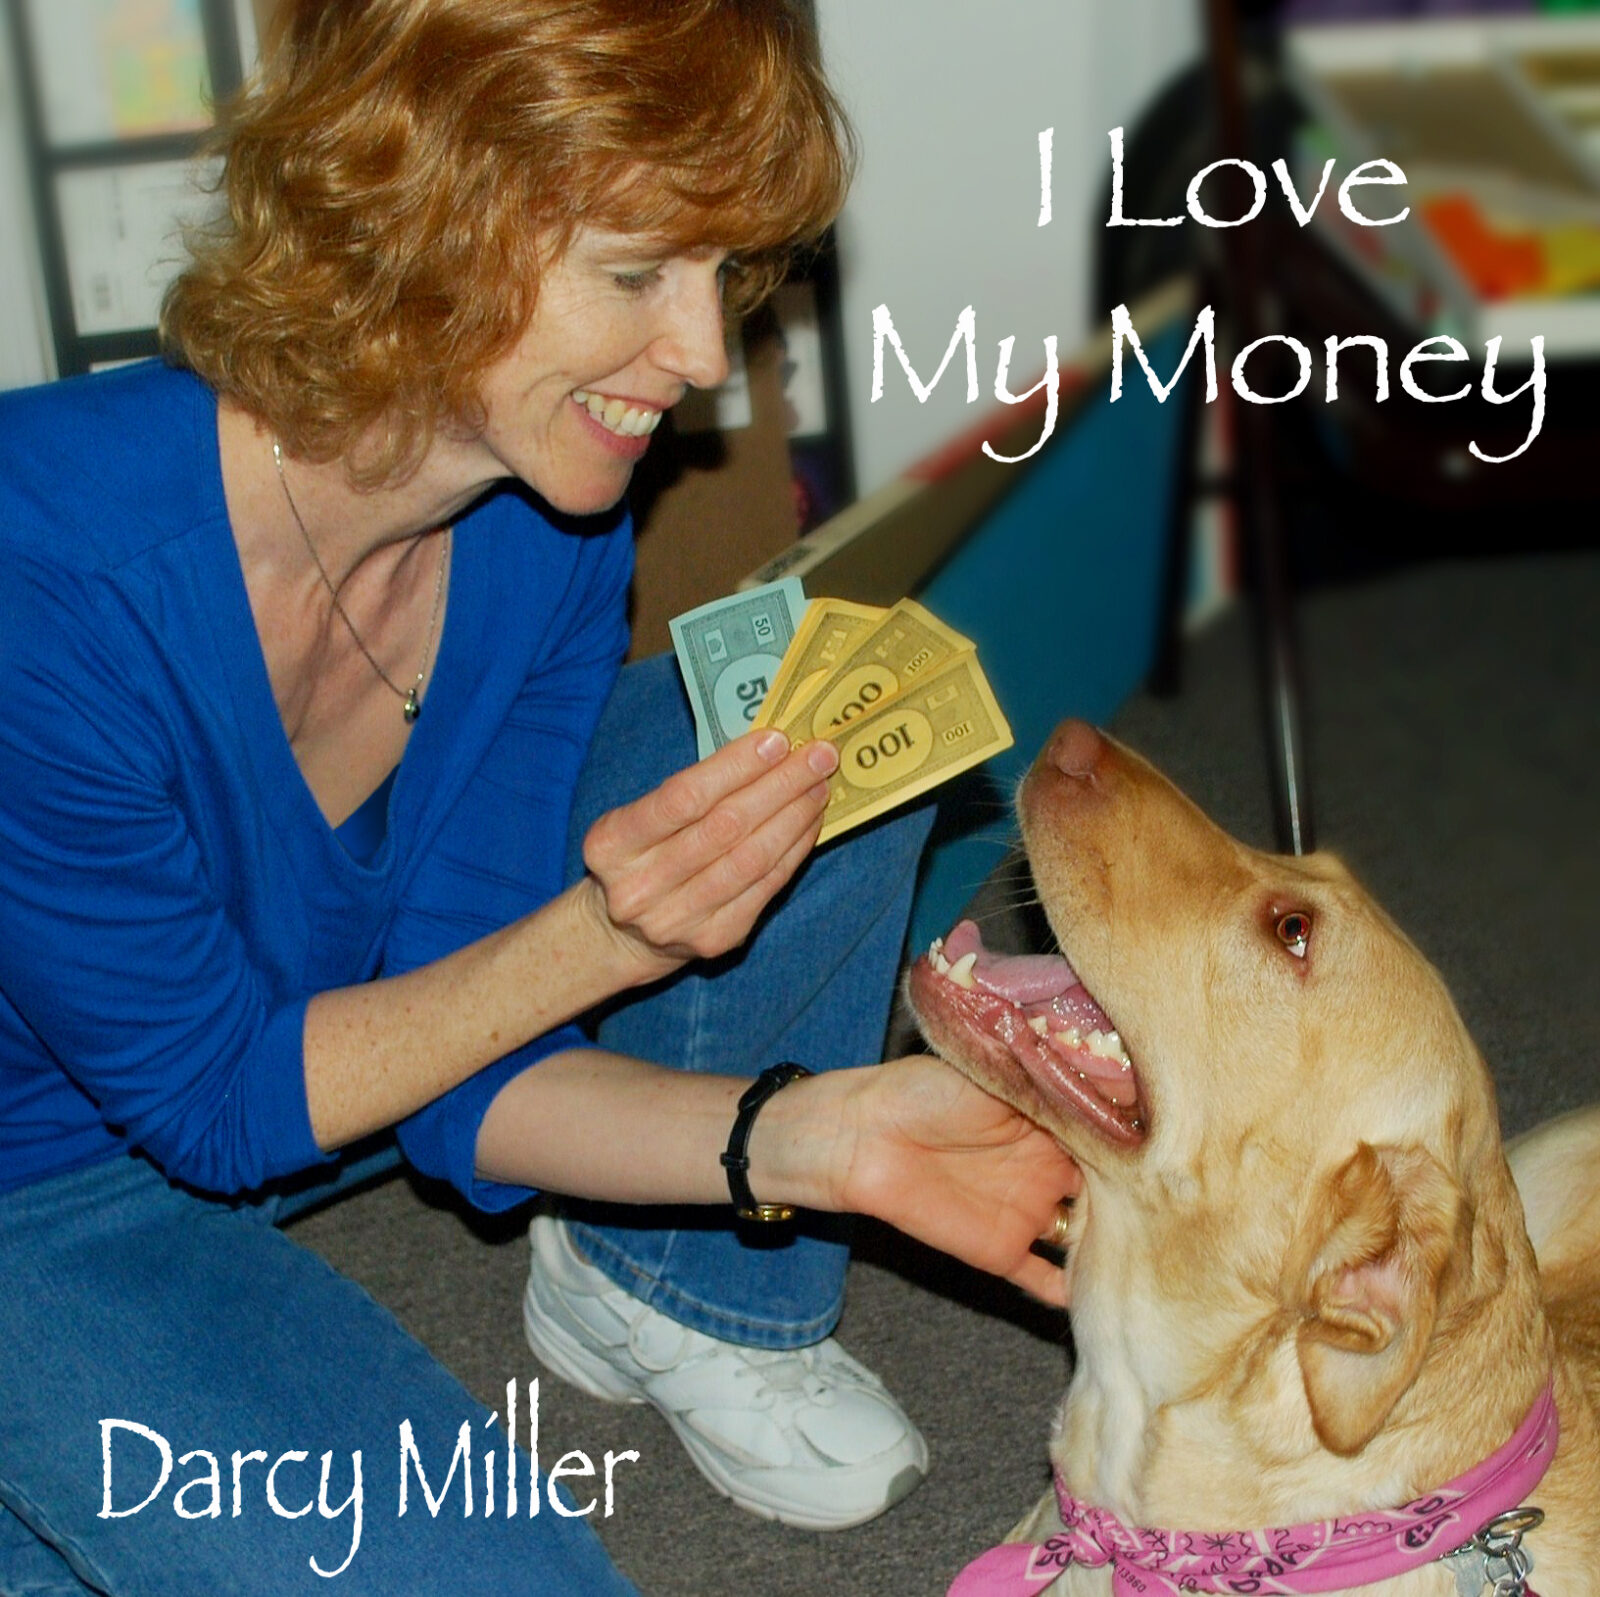 Darcy Miller